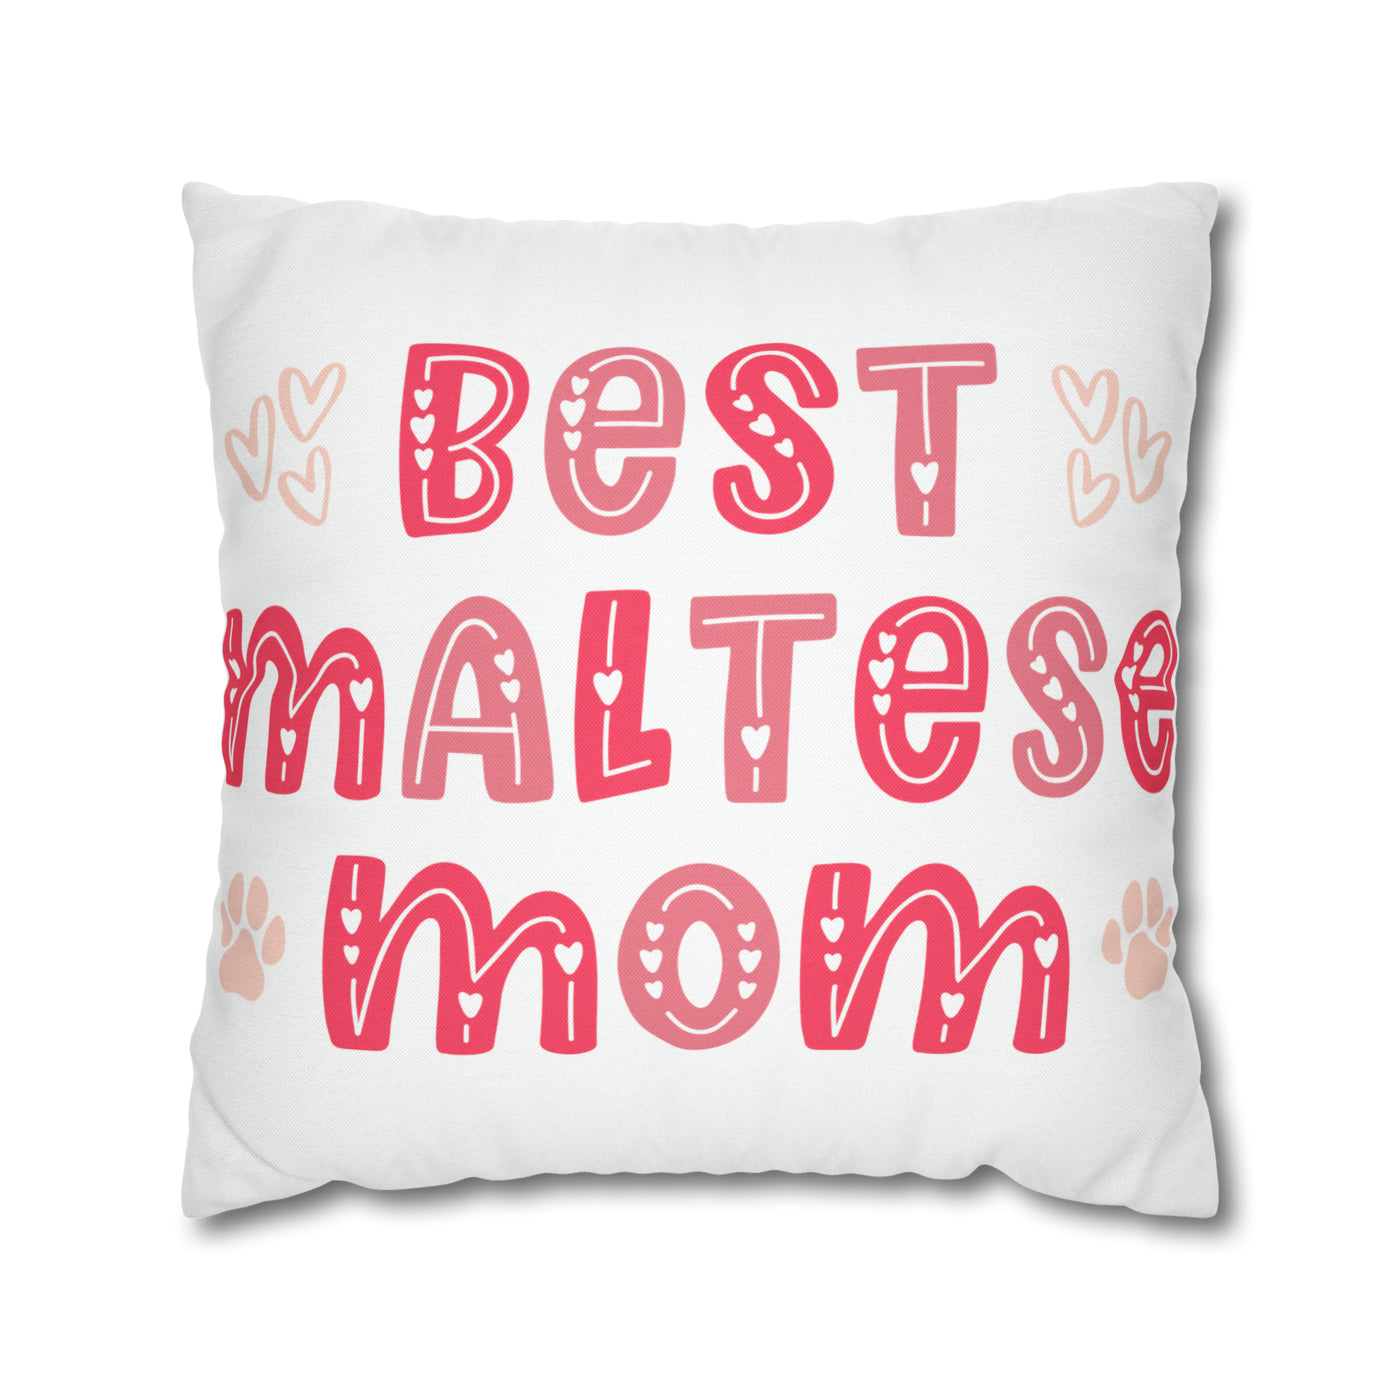 Best Maltese Mom Colored Print Square Pillow Case